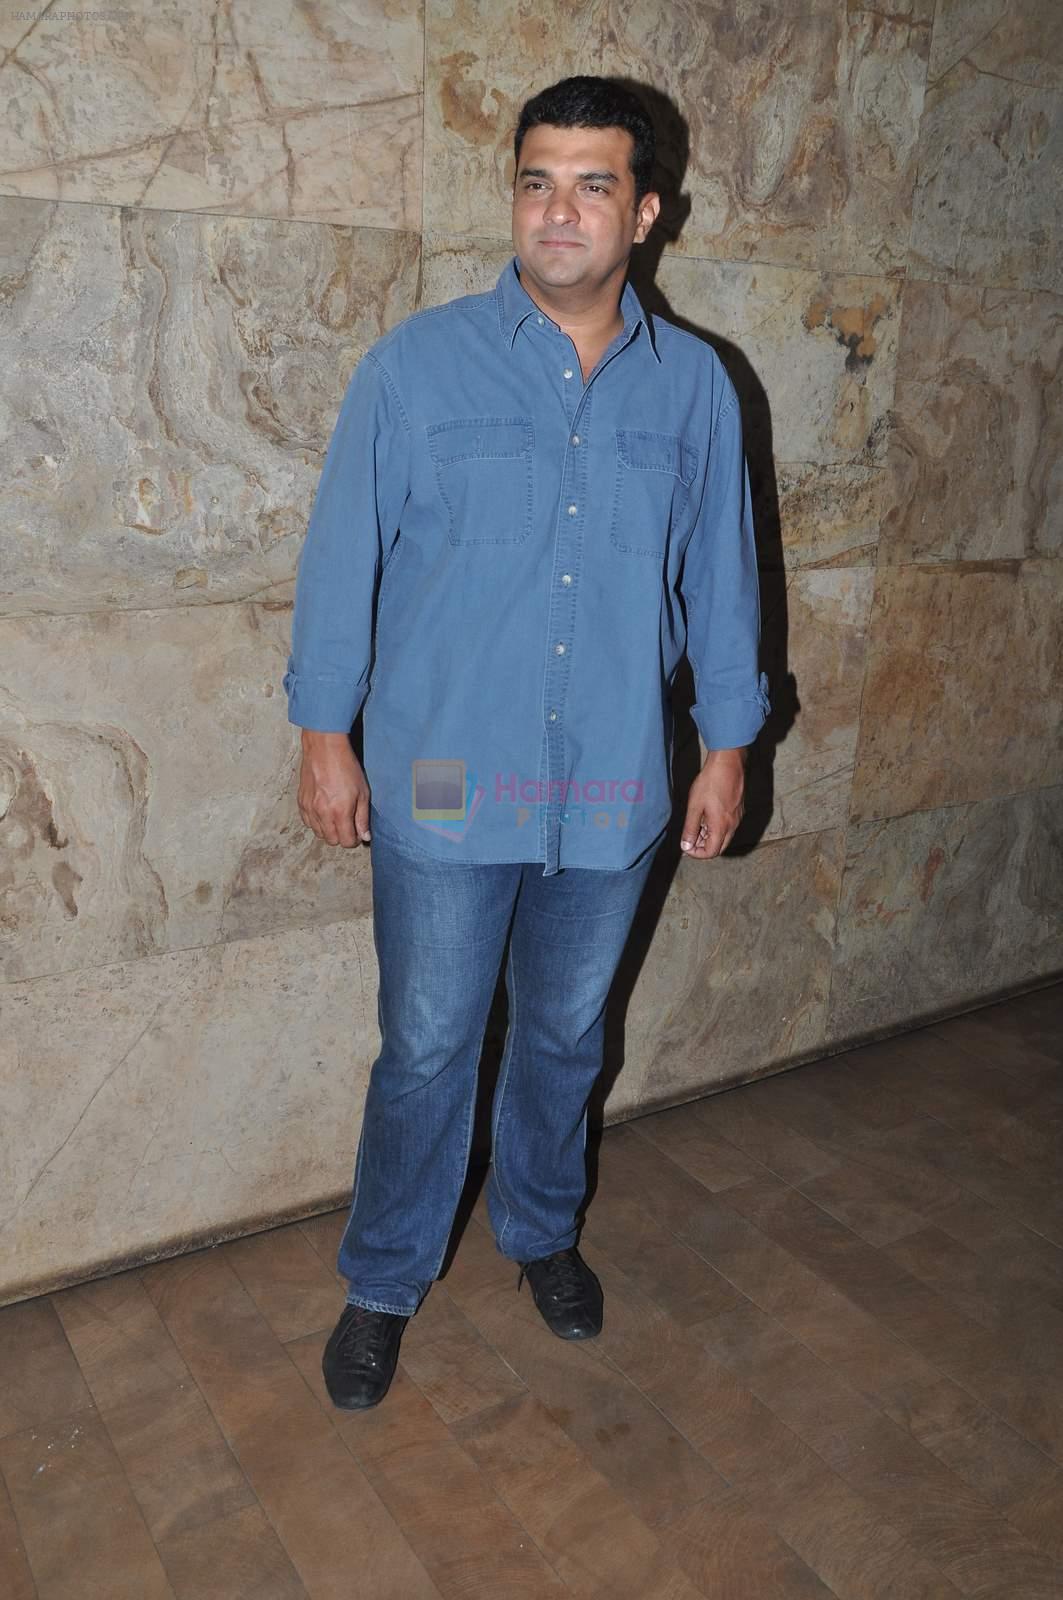 Siddharth Roy Kapur at tanu weds manu 2 screening in Mumbai on 20th May 2015